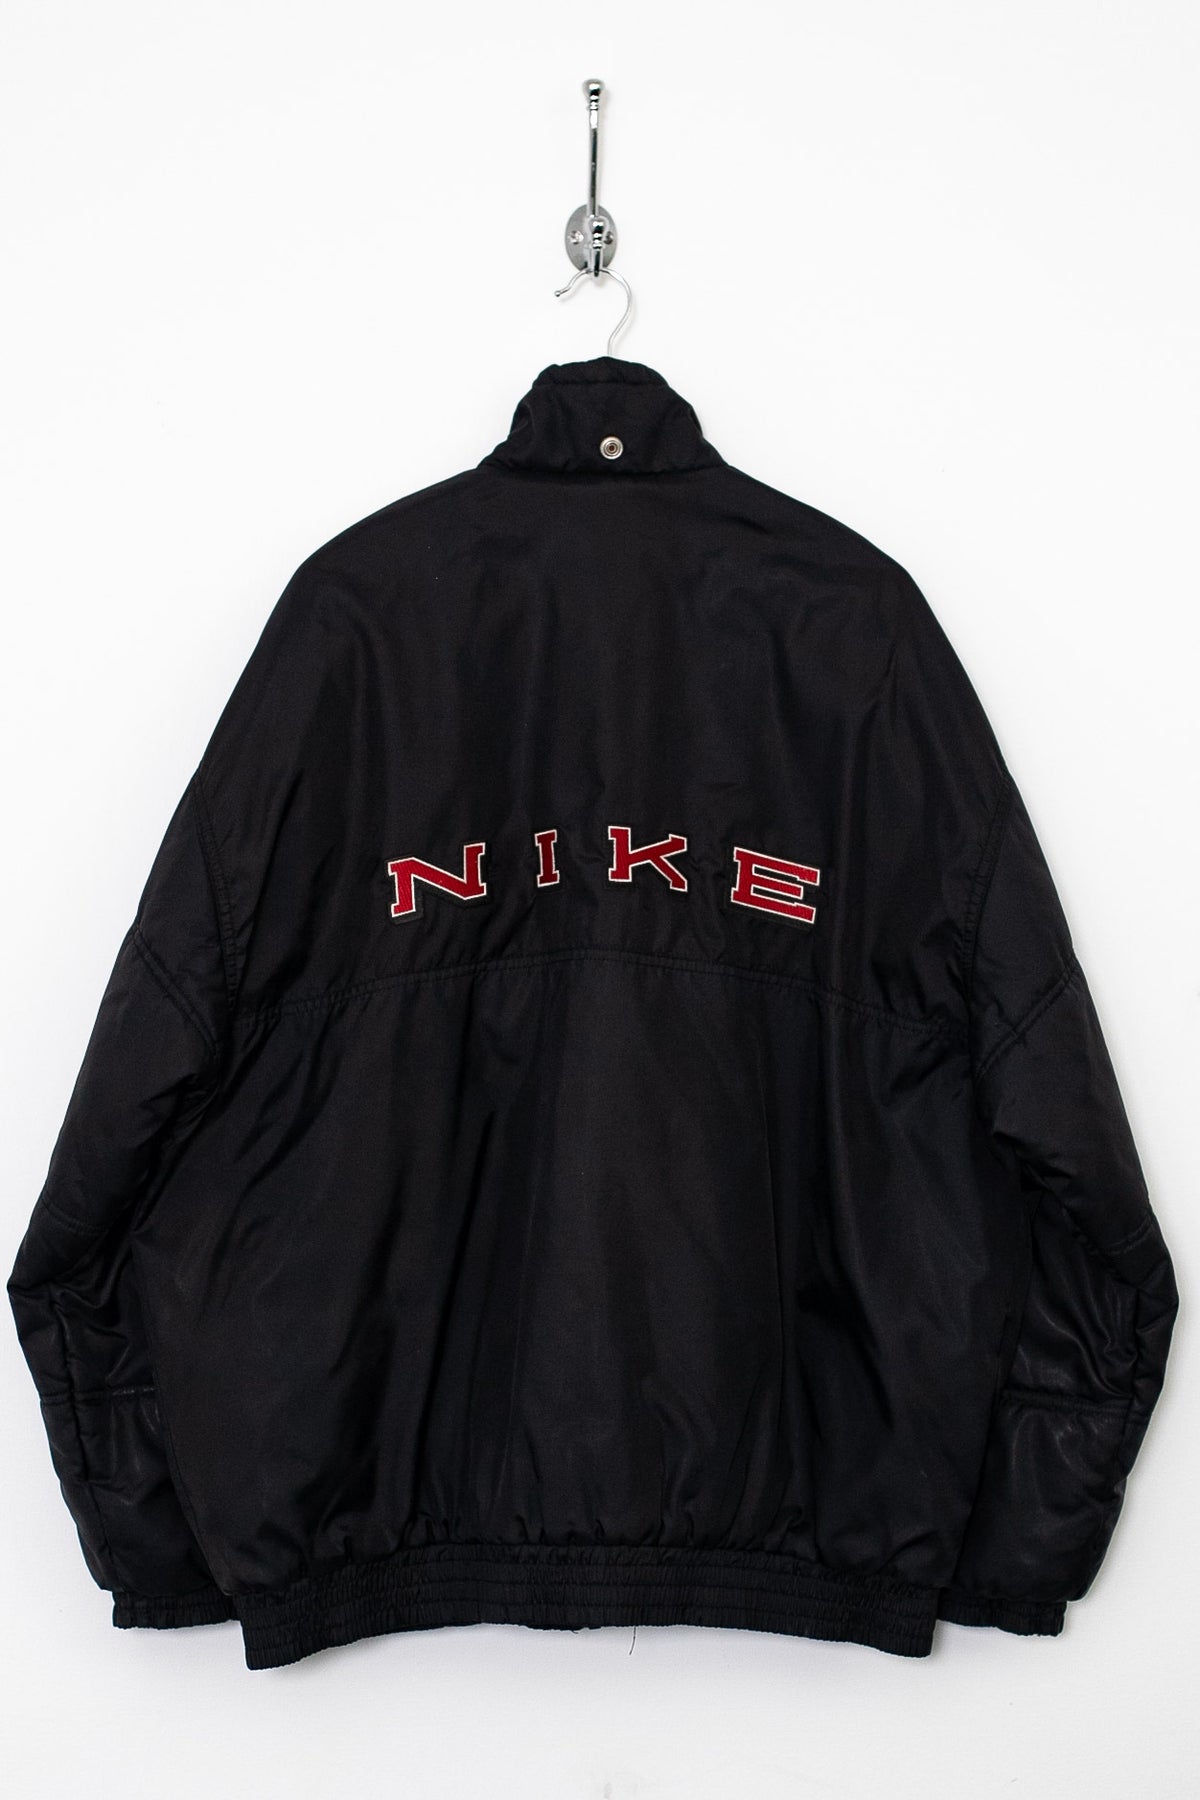 90s Nike Coat (M)